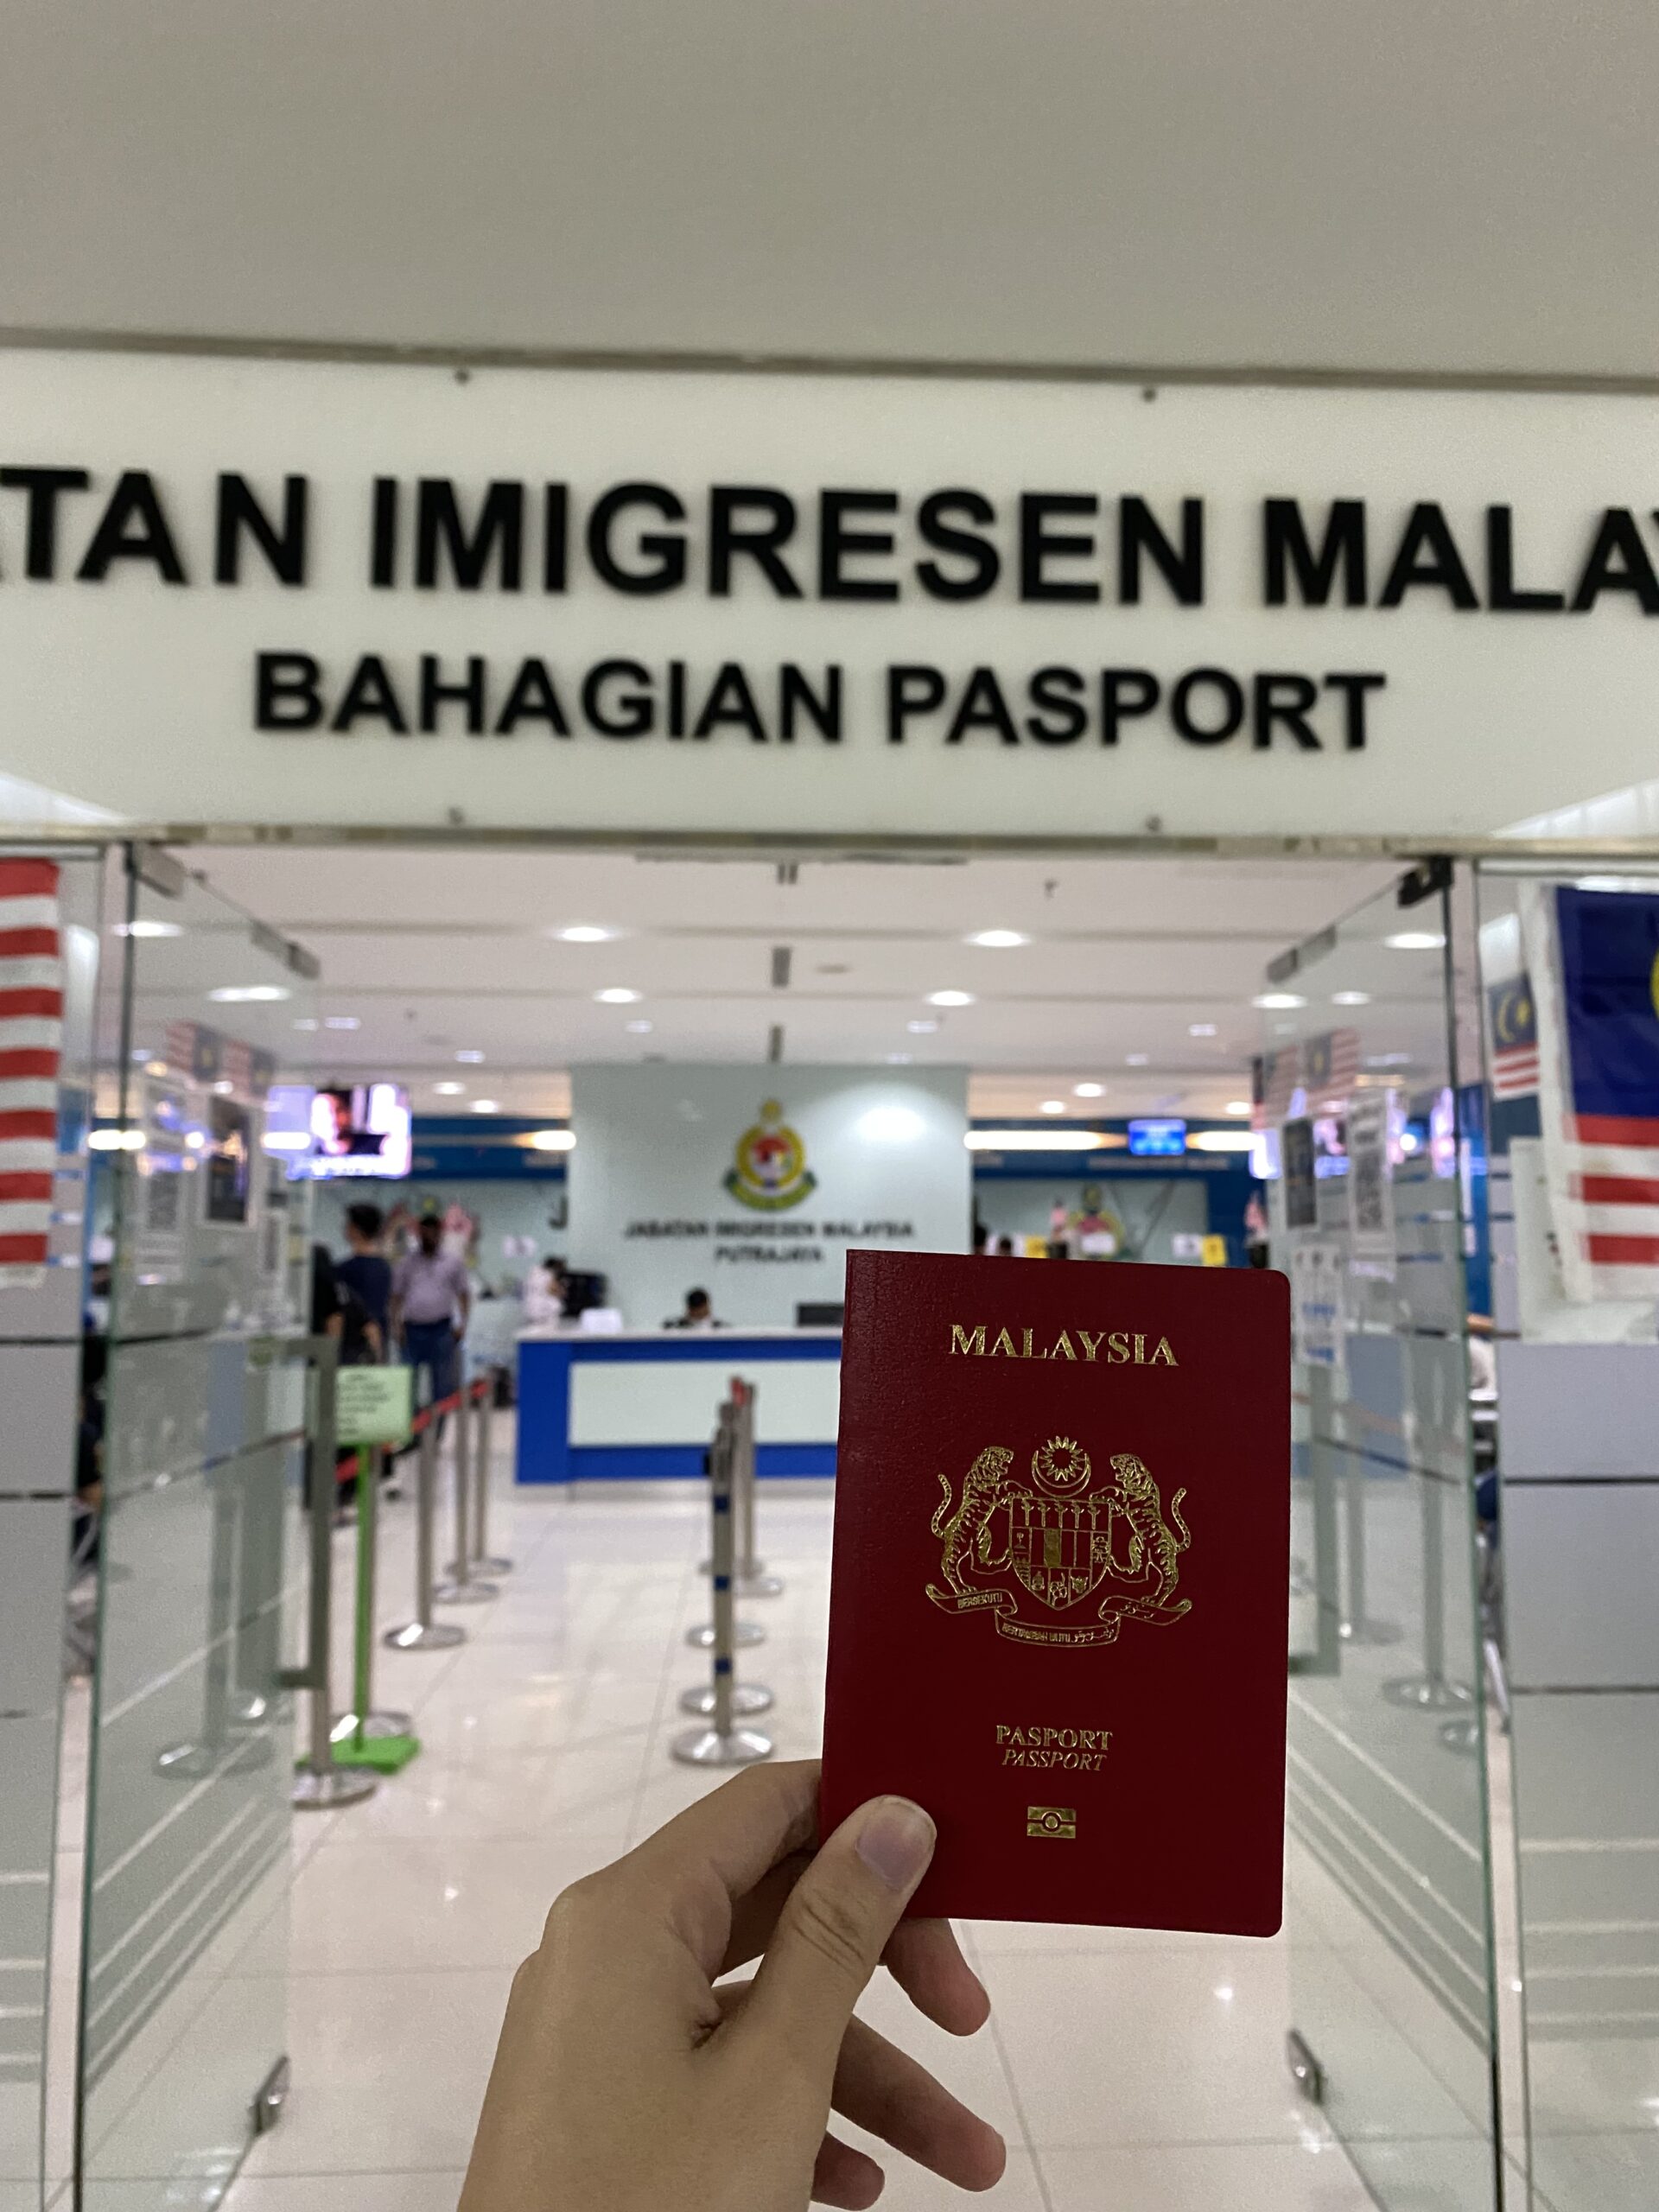 M’sian passport ranked 11th